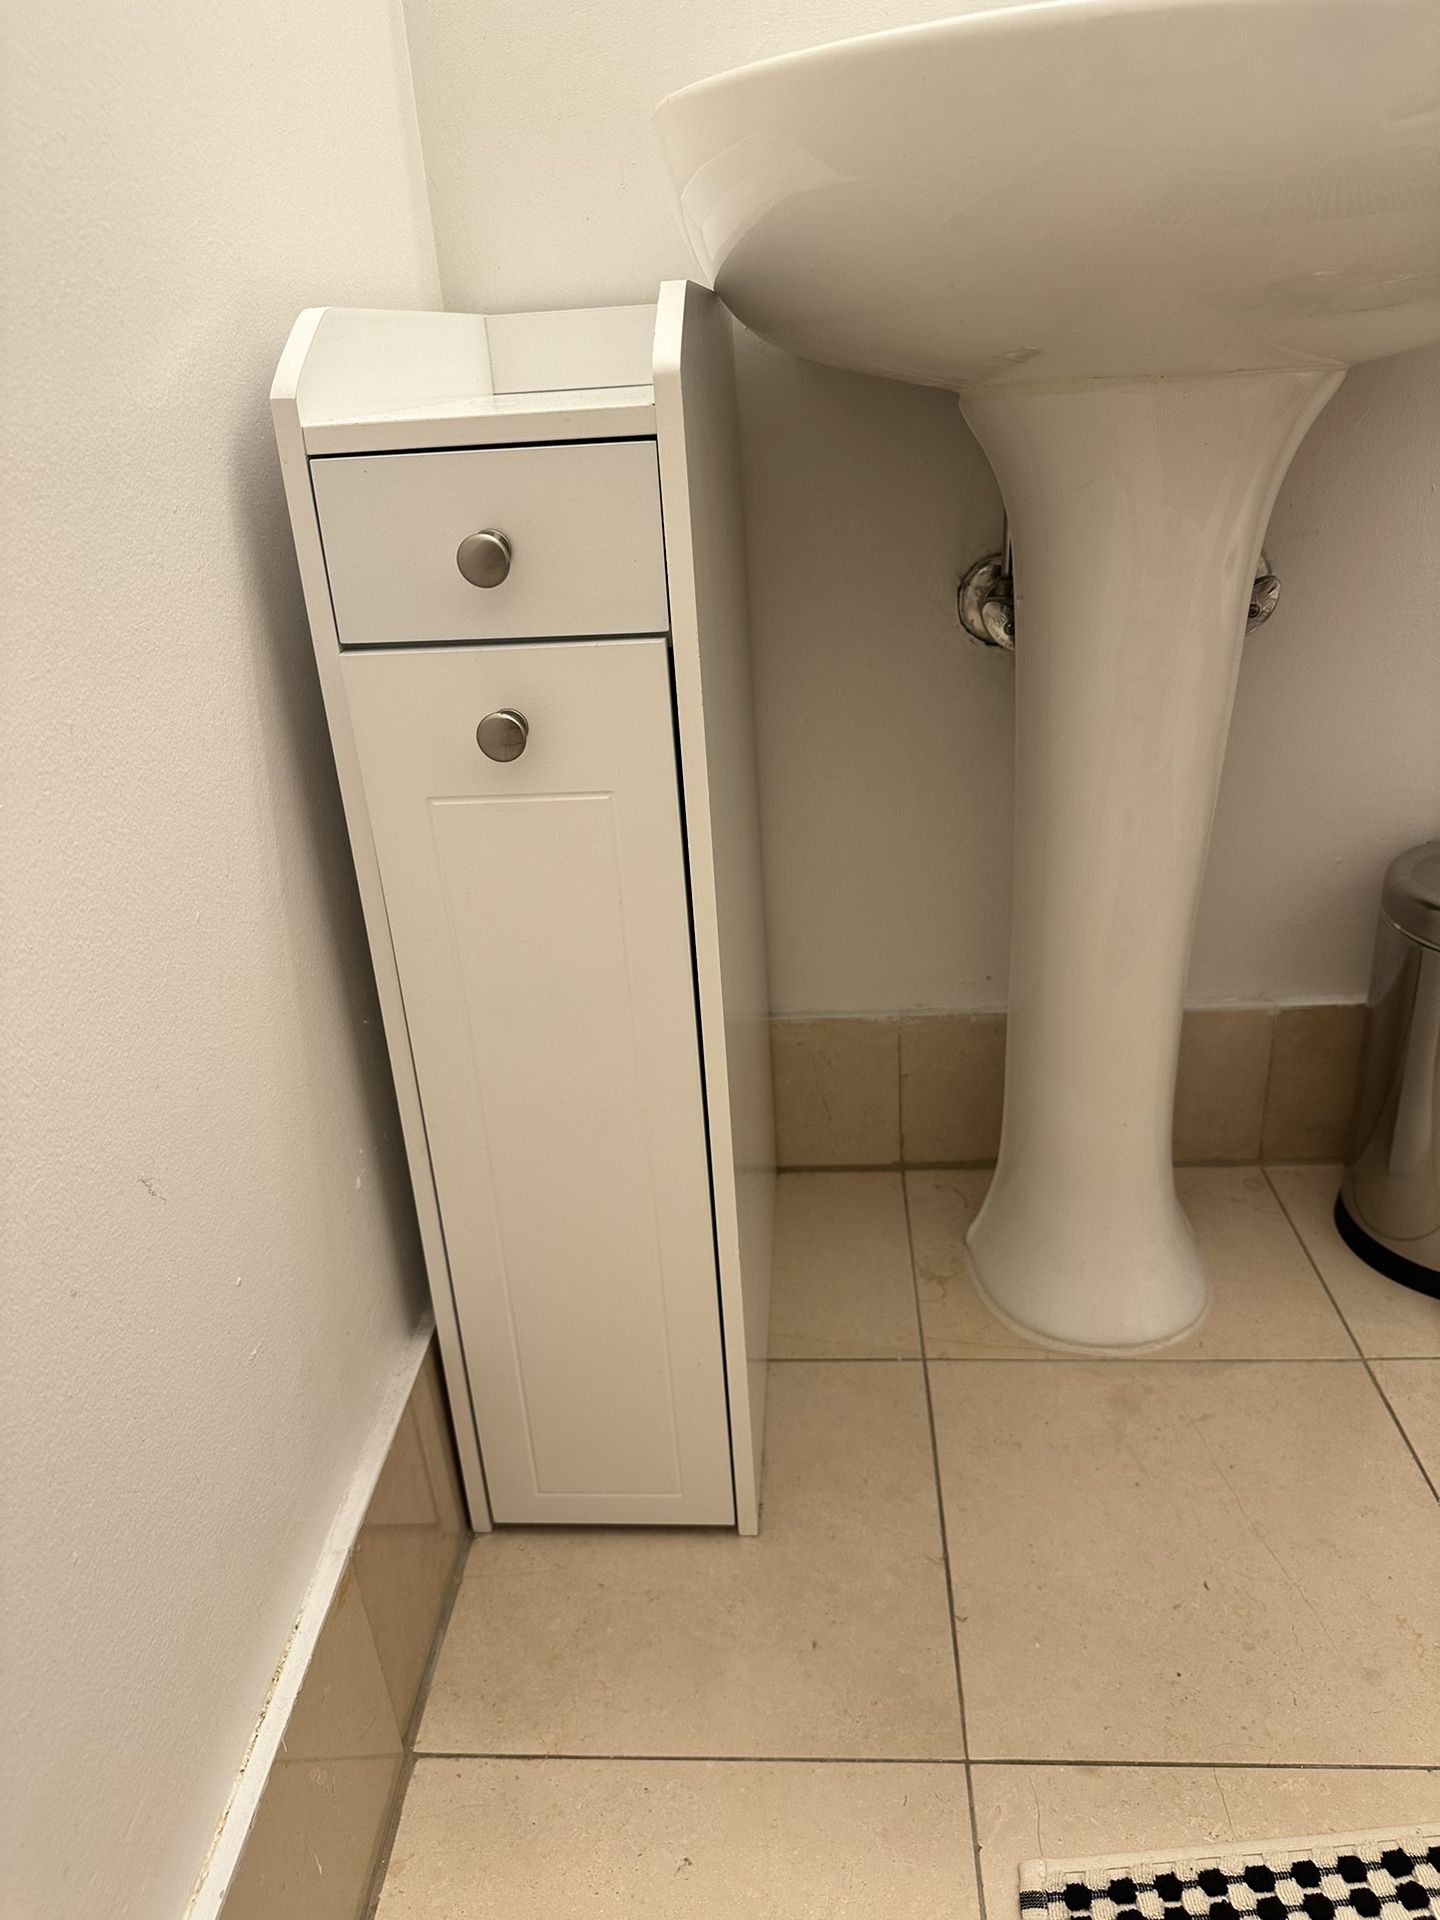 Bathroom Toilet Paper Cabinet - White